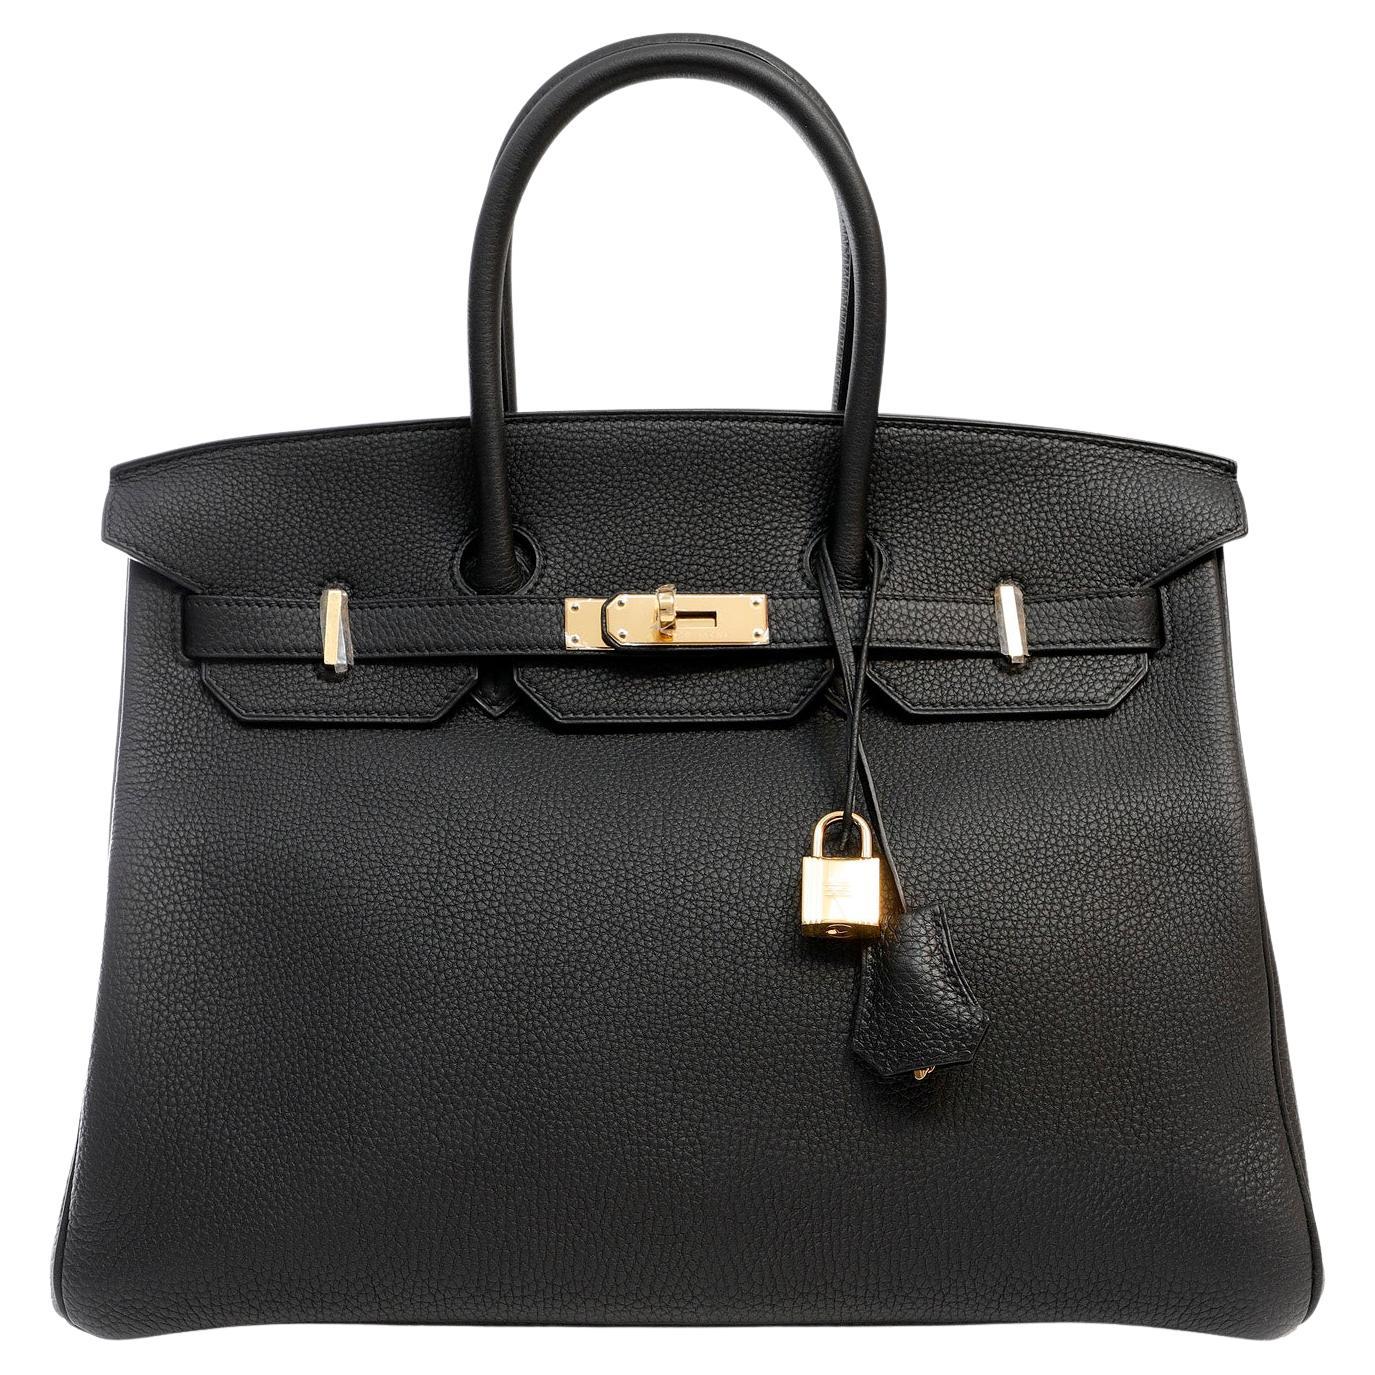 Hermès Black Togo Leather 35 cm Birkin with Gold Hardware